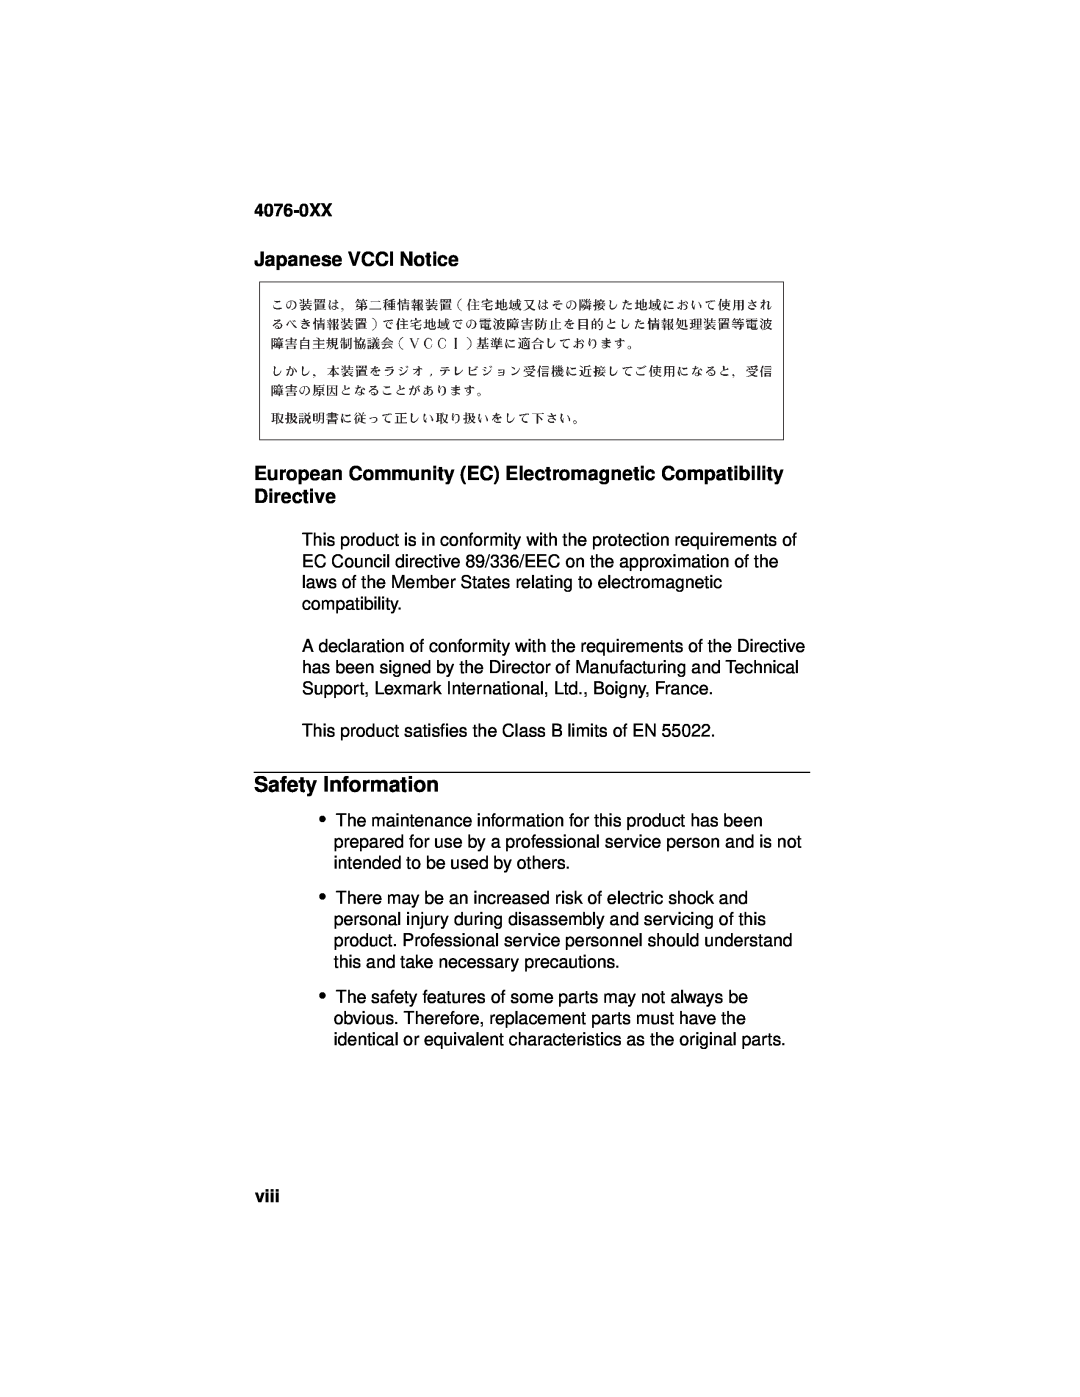 Lexmark 4076-0XX manual Safety Information, Japanese VCCI Notice, viii 